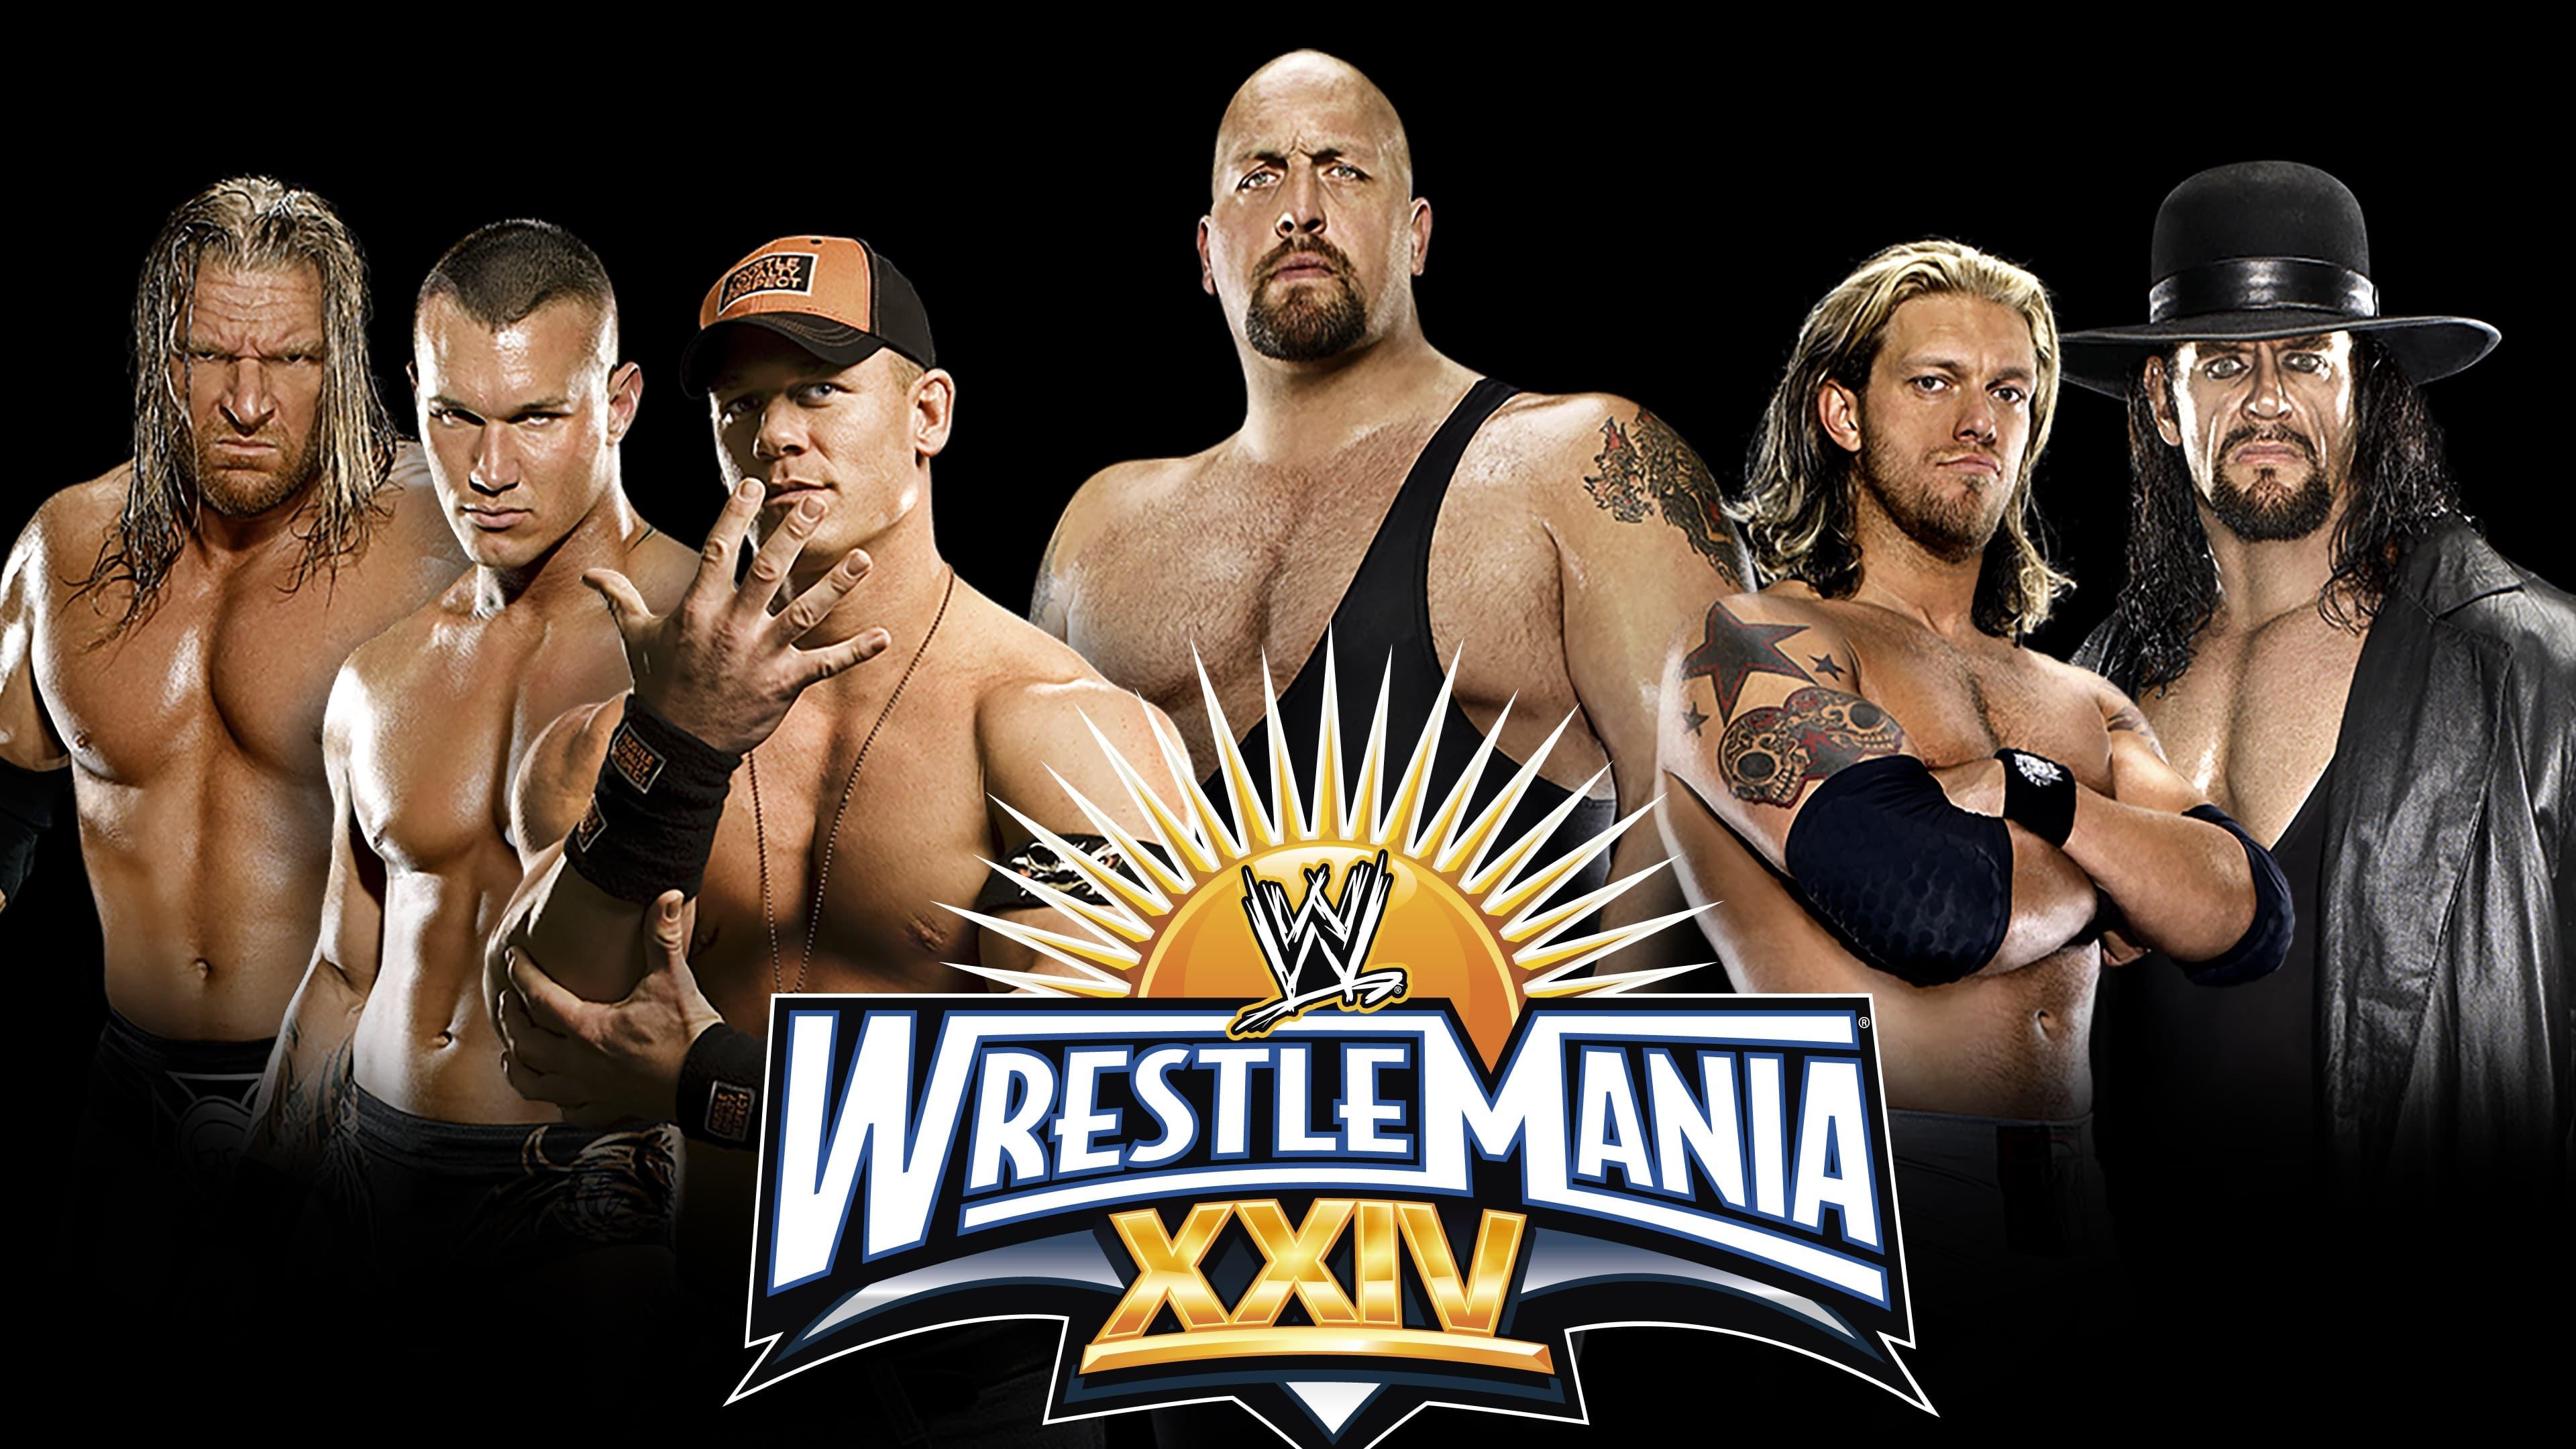 WWE WrestleMania XXIV backdrop